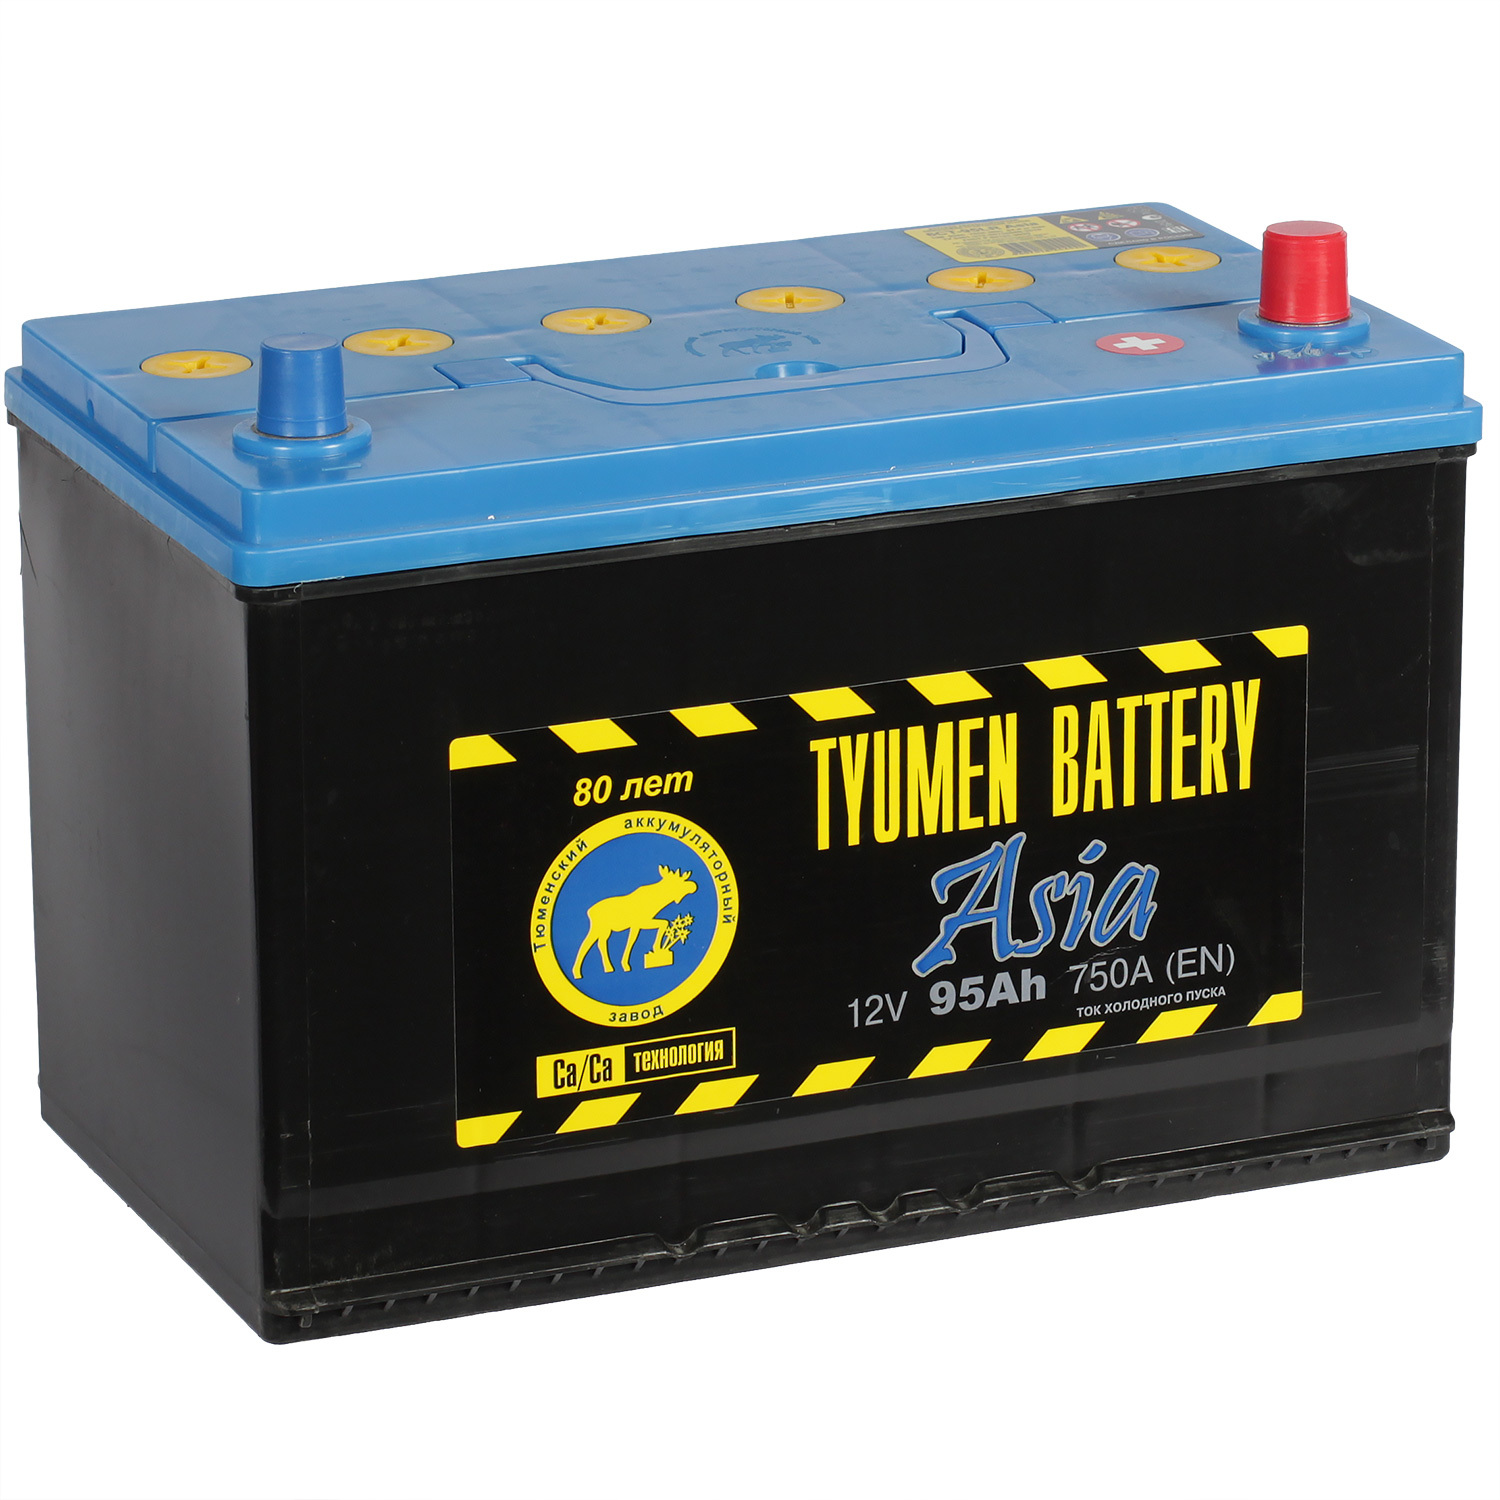 Tyumen Battery Автомобильный аккумулятор Tyumen Battery 95 Ач обратная полярность D31L tyumen battery автомобильный аккумулятор tyumen battery premium 50 ач обратная полярность l1